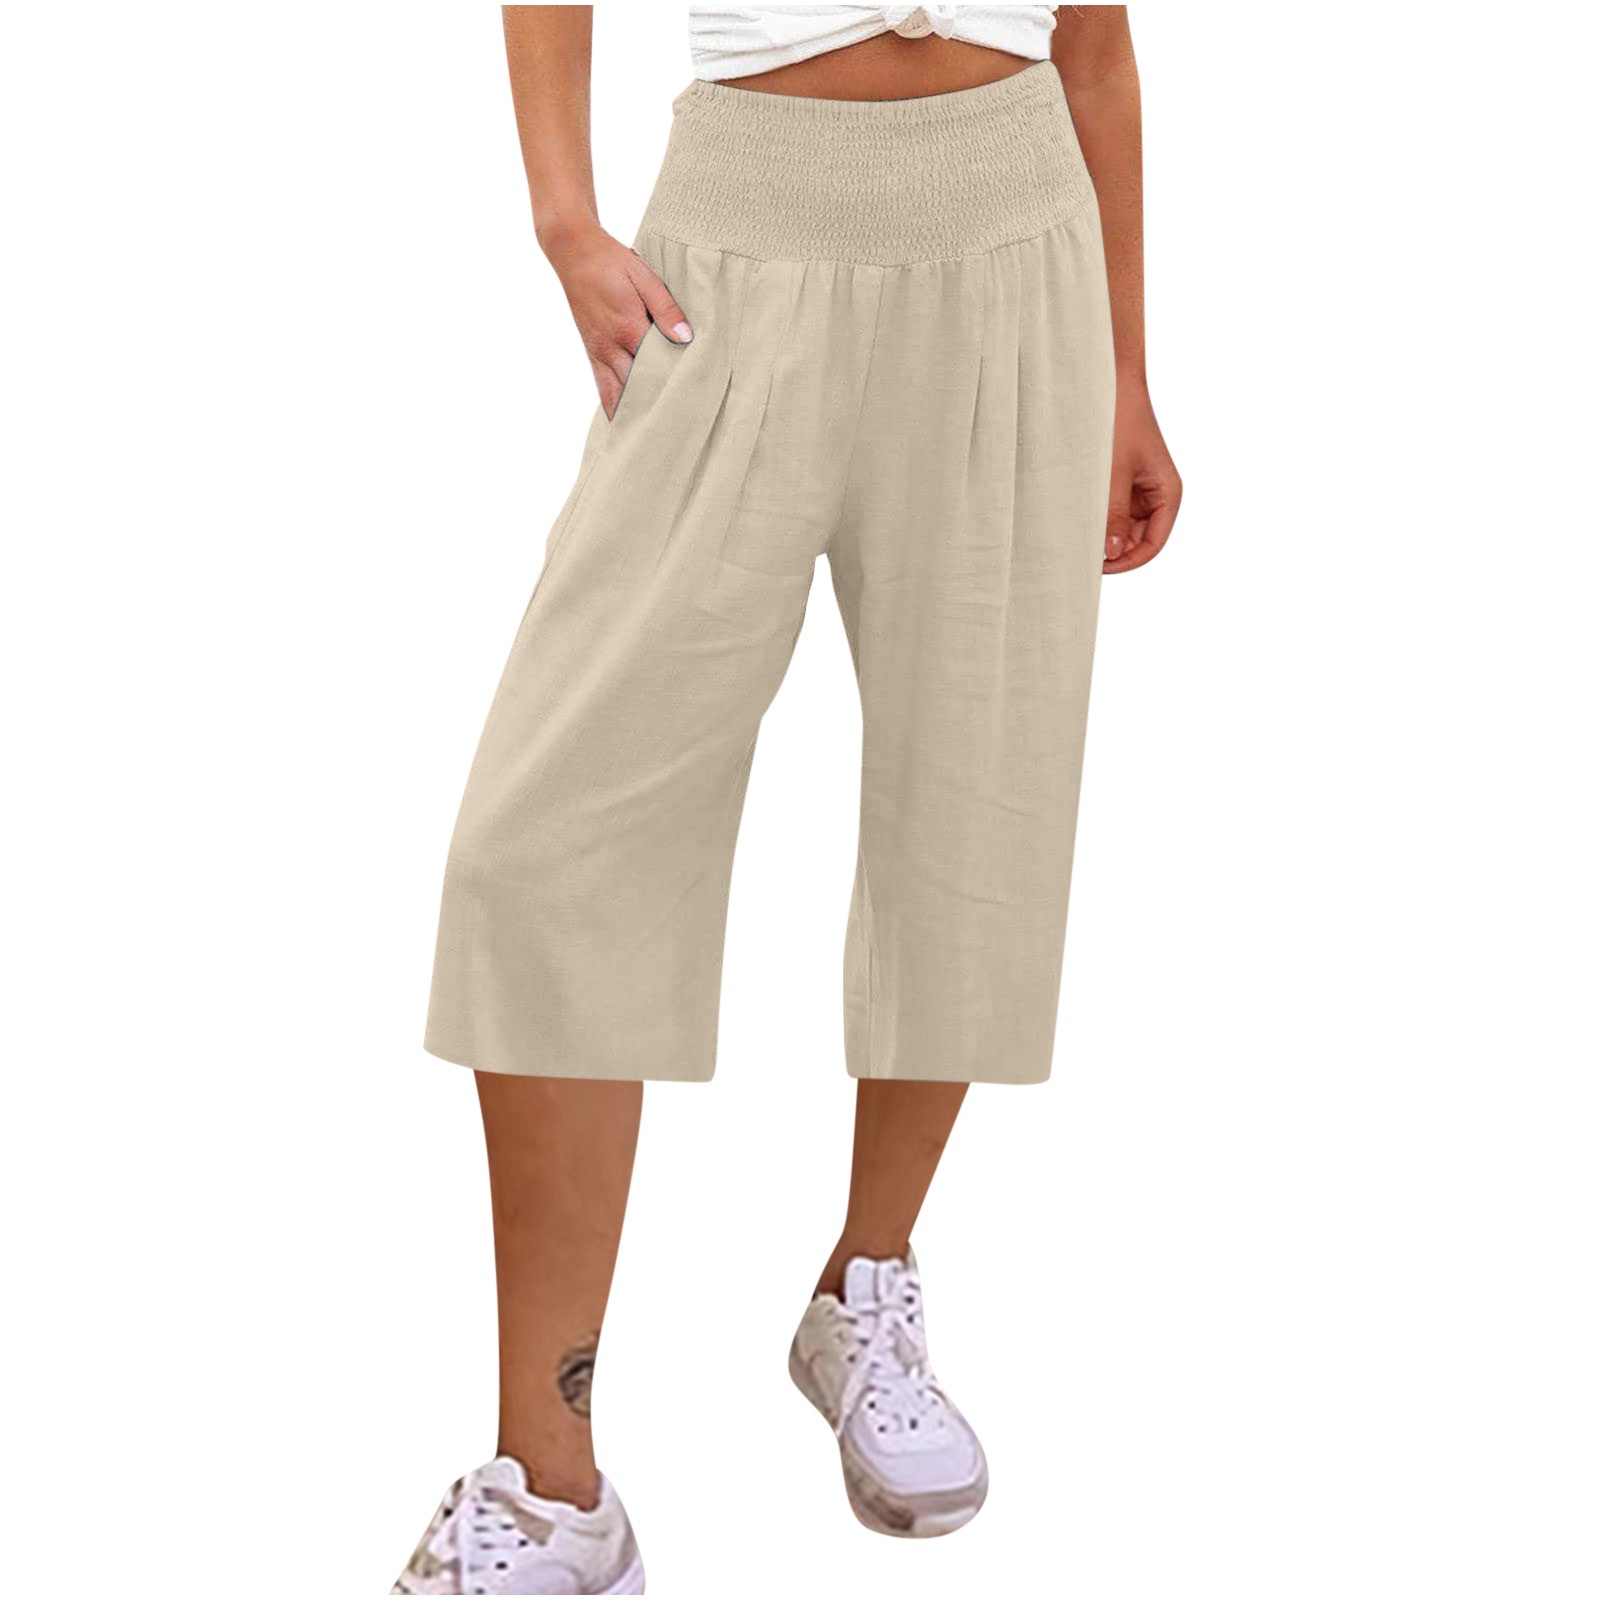 JGTDBPO Capri Linen Pants For Women Casual Solid Cotton Linen ...